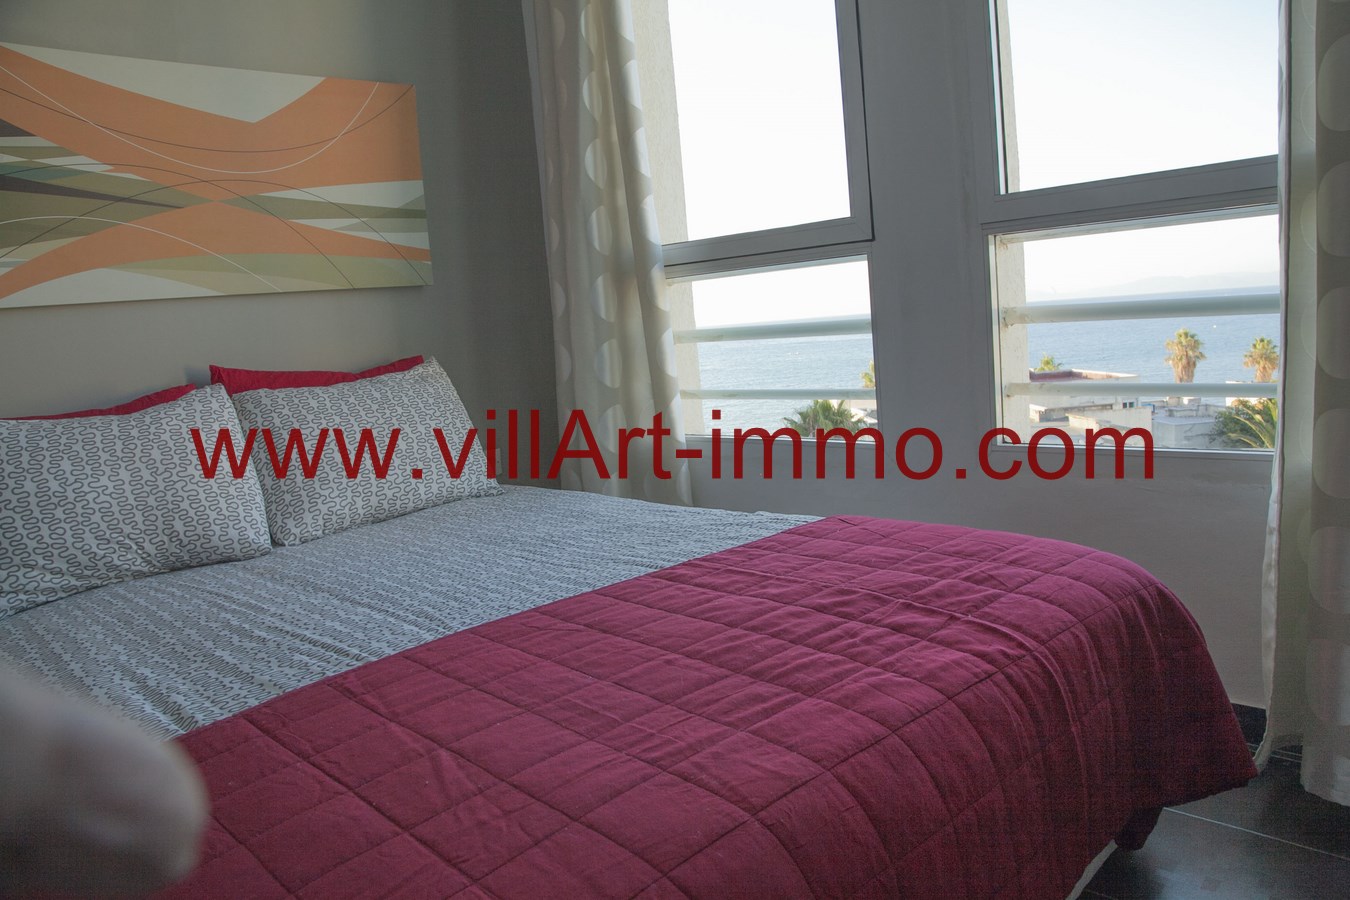 6-Location-Appartement-Tanger-Chambre 1-L747-Villart immo